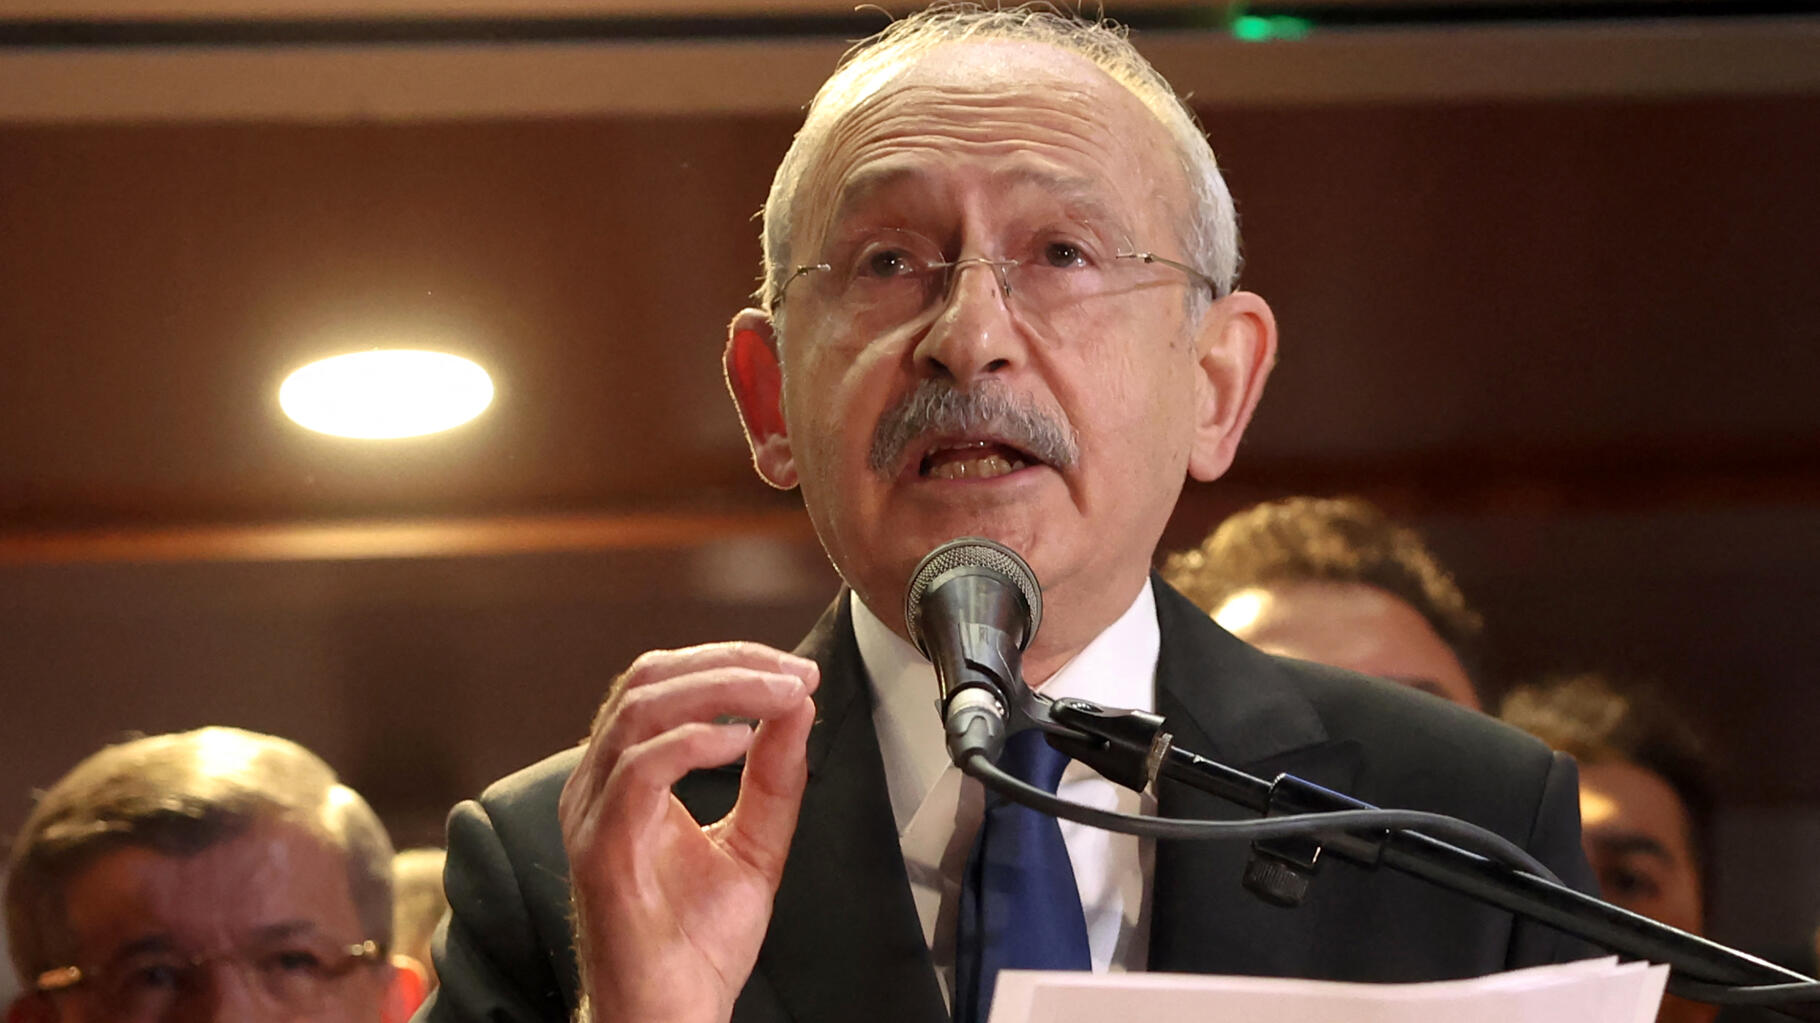 Erdoğan’s main opponent in the next presidential election is Kemal Kilicadoglu